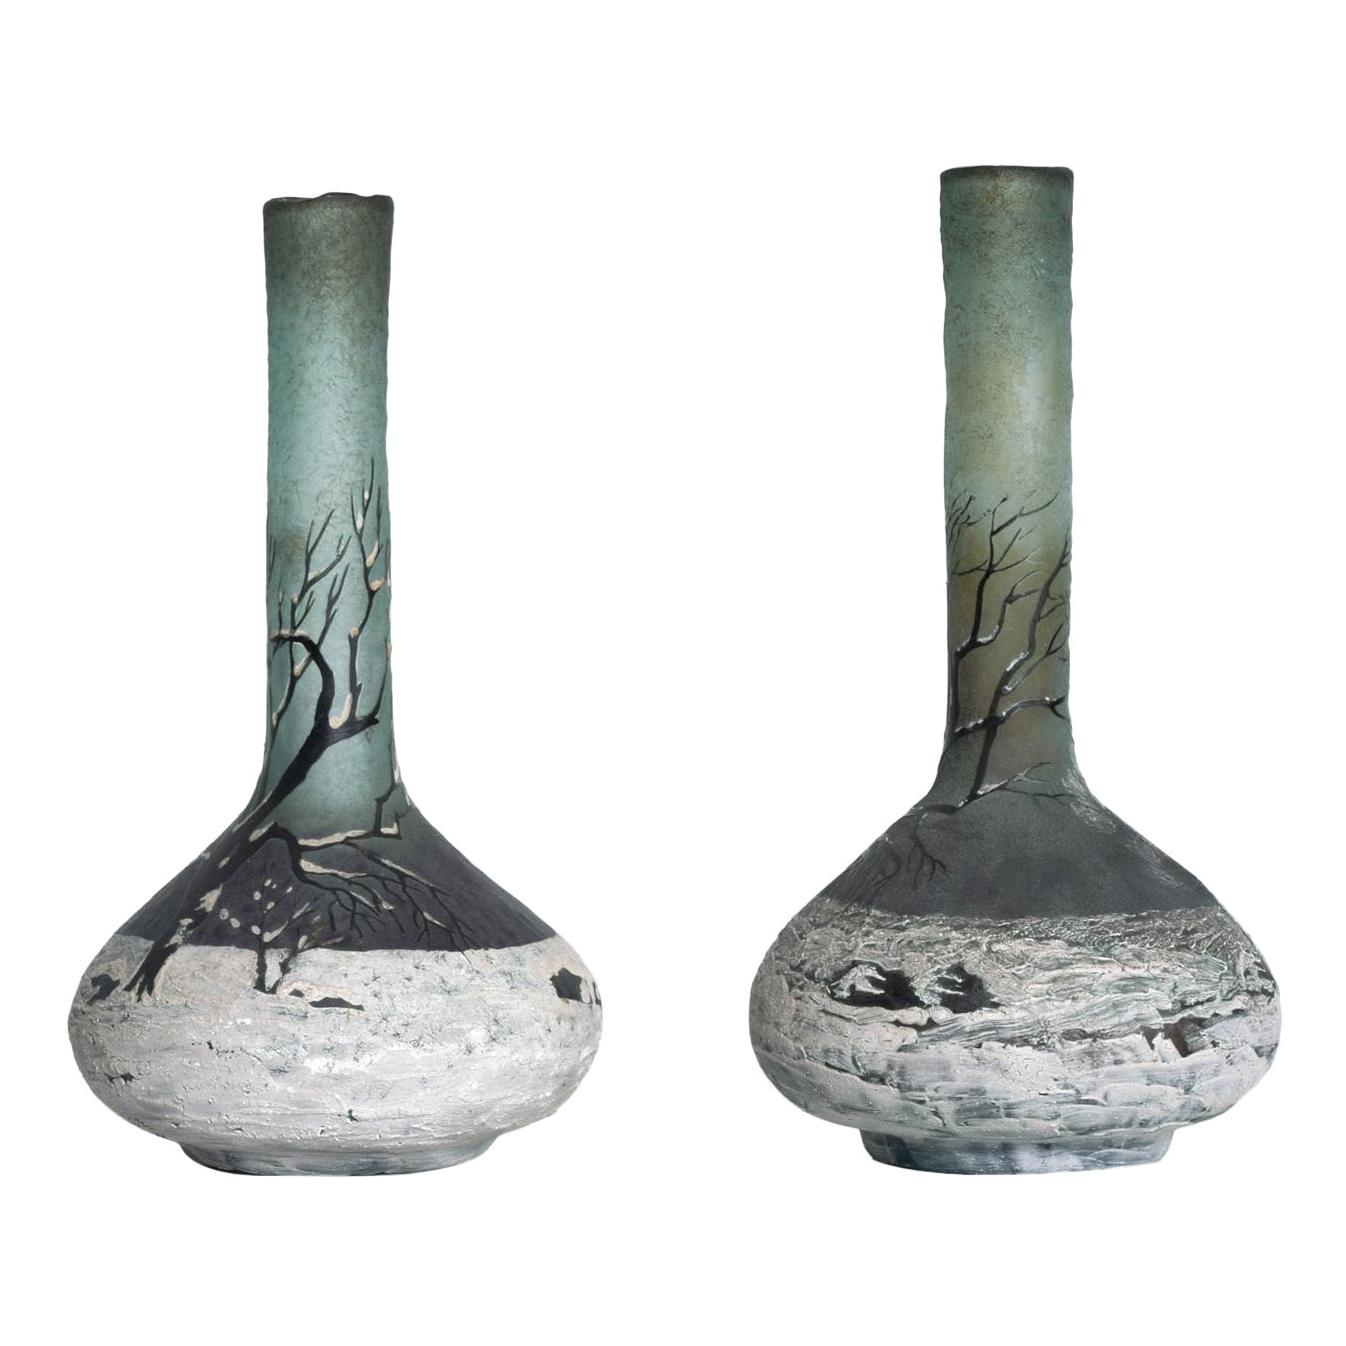 Fine French Art Glass Cameo Bud Vases by Andre Delatte 1920s Nancy, France